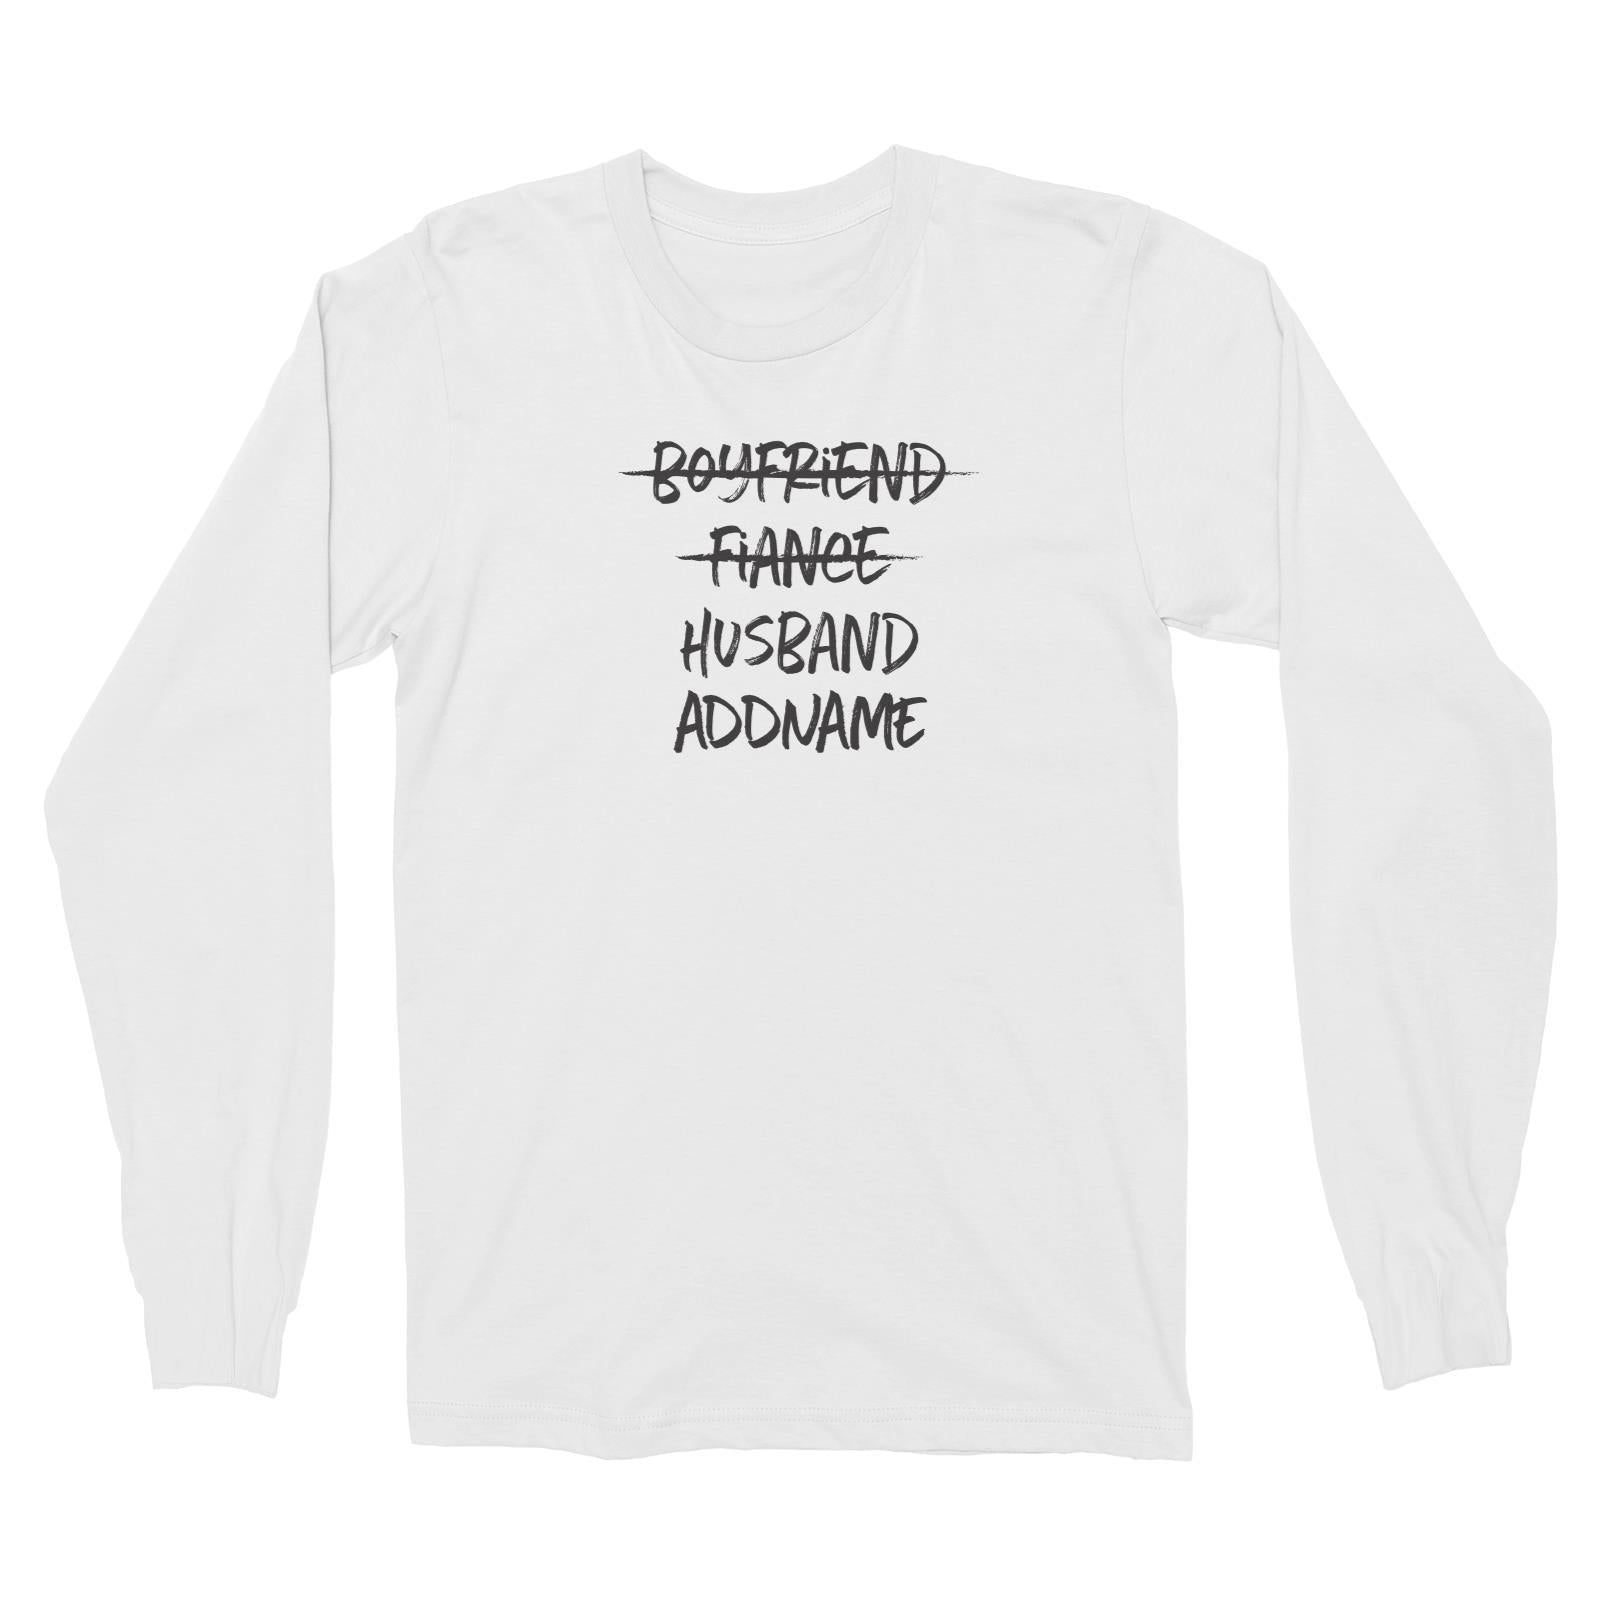 Husband and Wife Boyfriend Fiance Husband Addname Long Sleeve Unisex T-Shirt